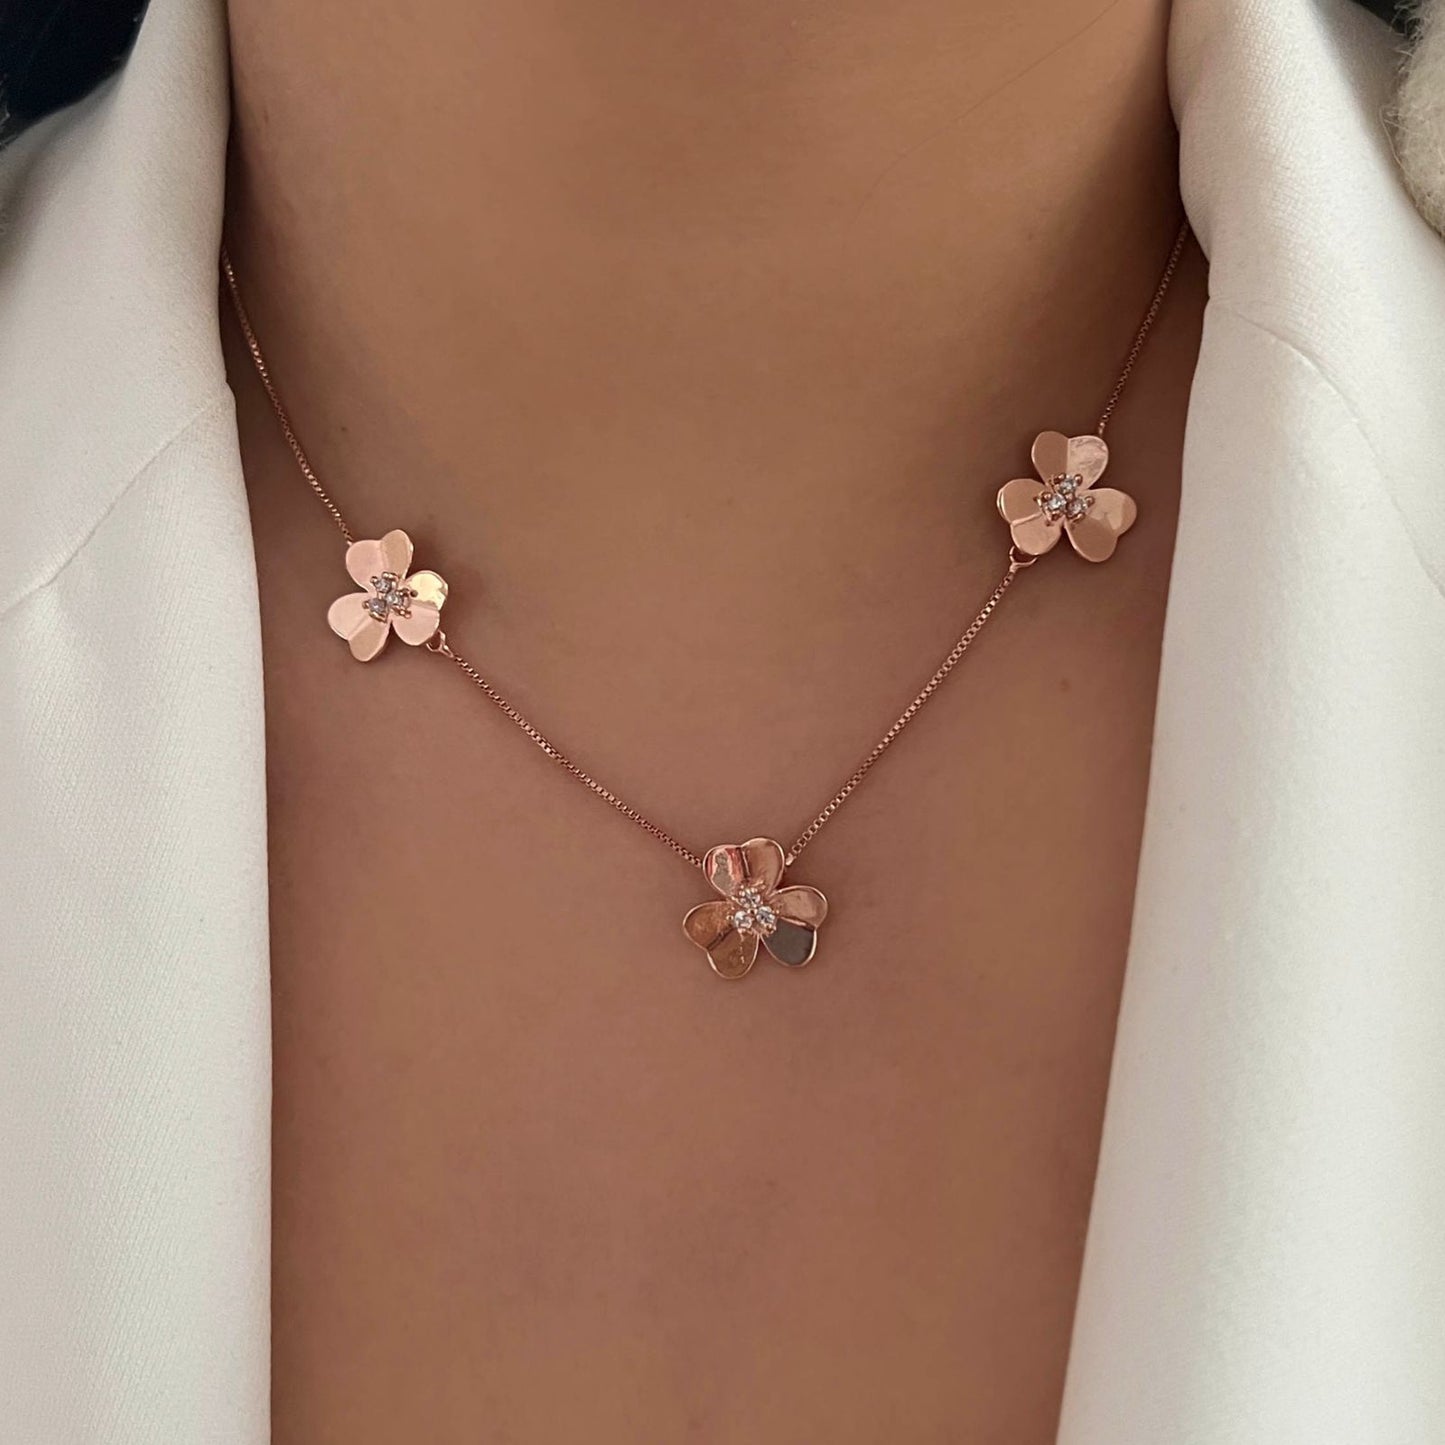 3 flower necklace (691)